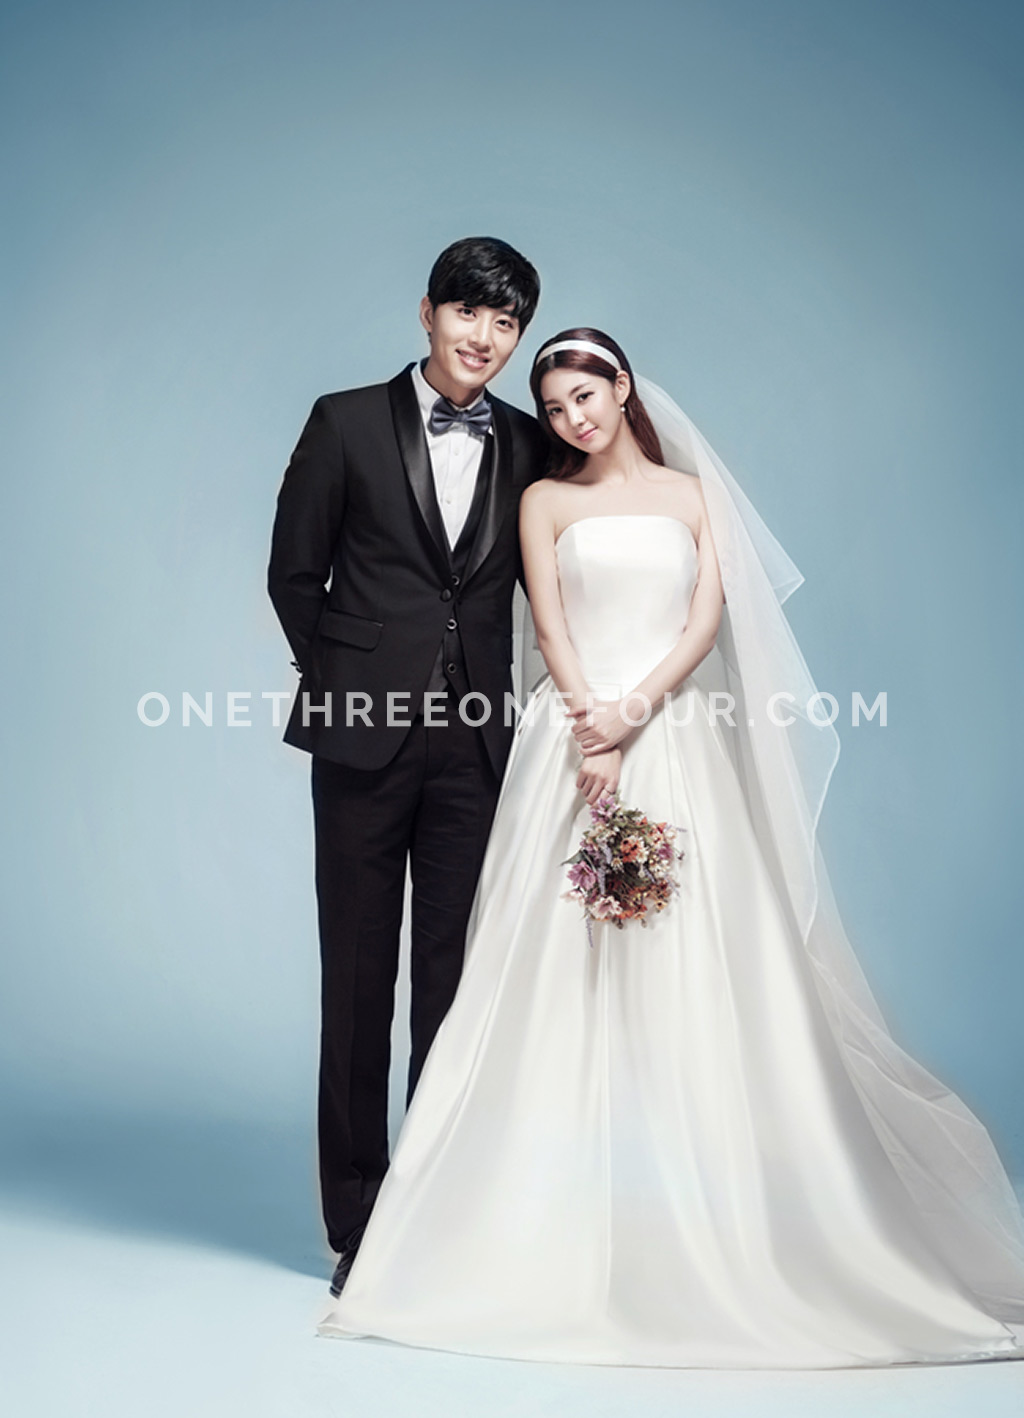 Korean Wedding Photos: Indoor Set by SUM Studio on OneThreeOneFour 28